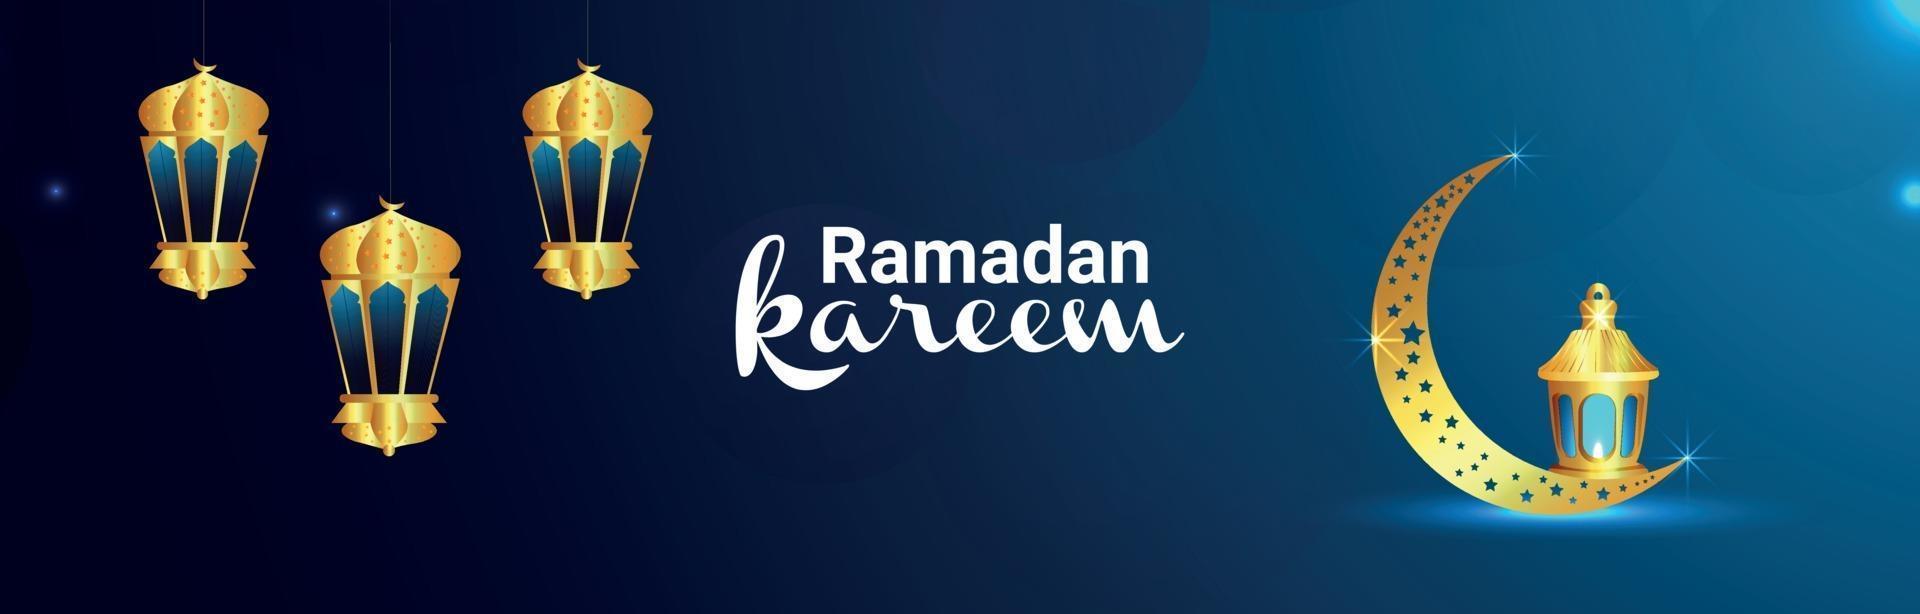 Ramadan kareem banner with golden islamic lantern and moon vector